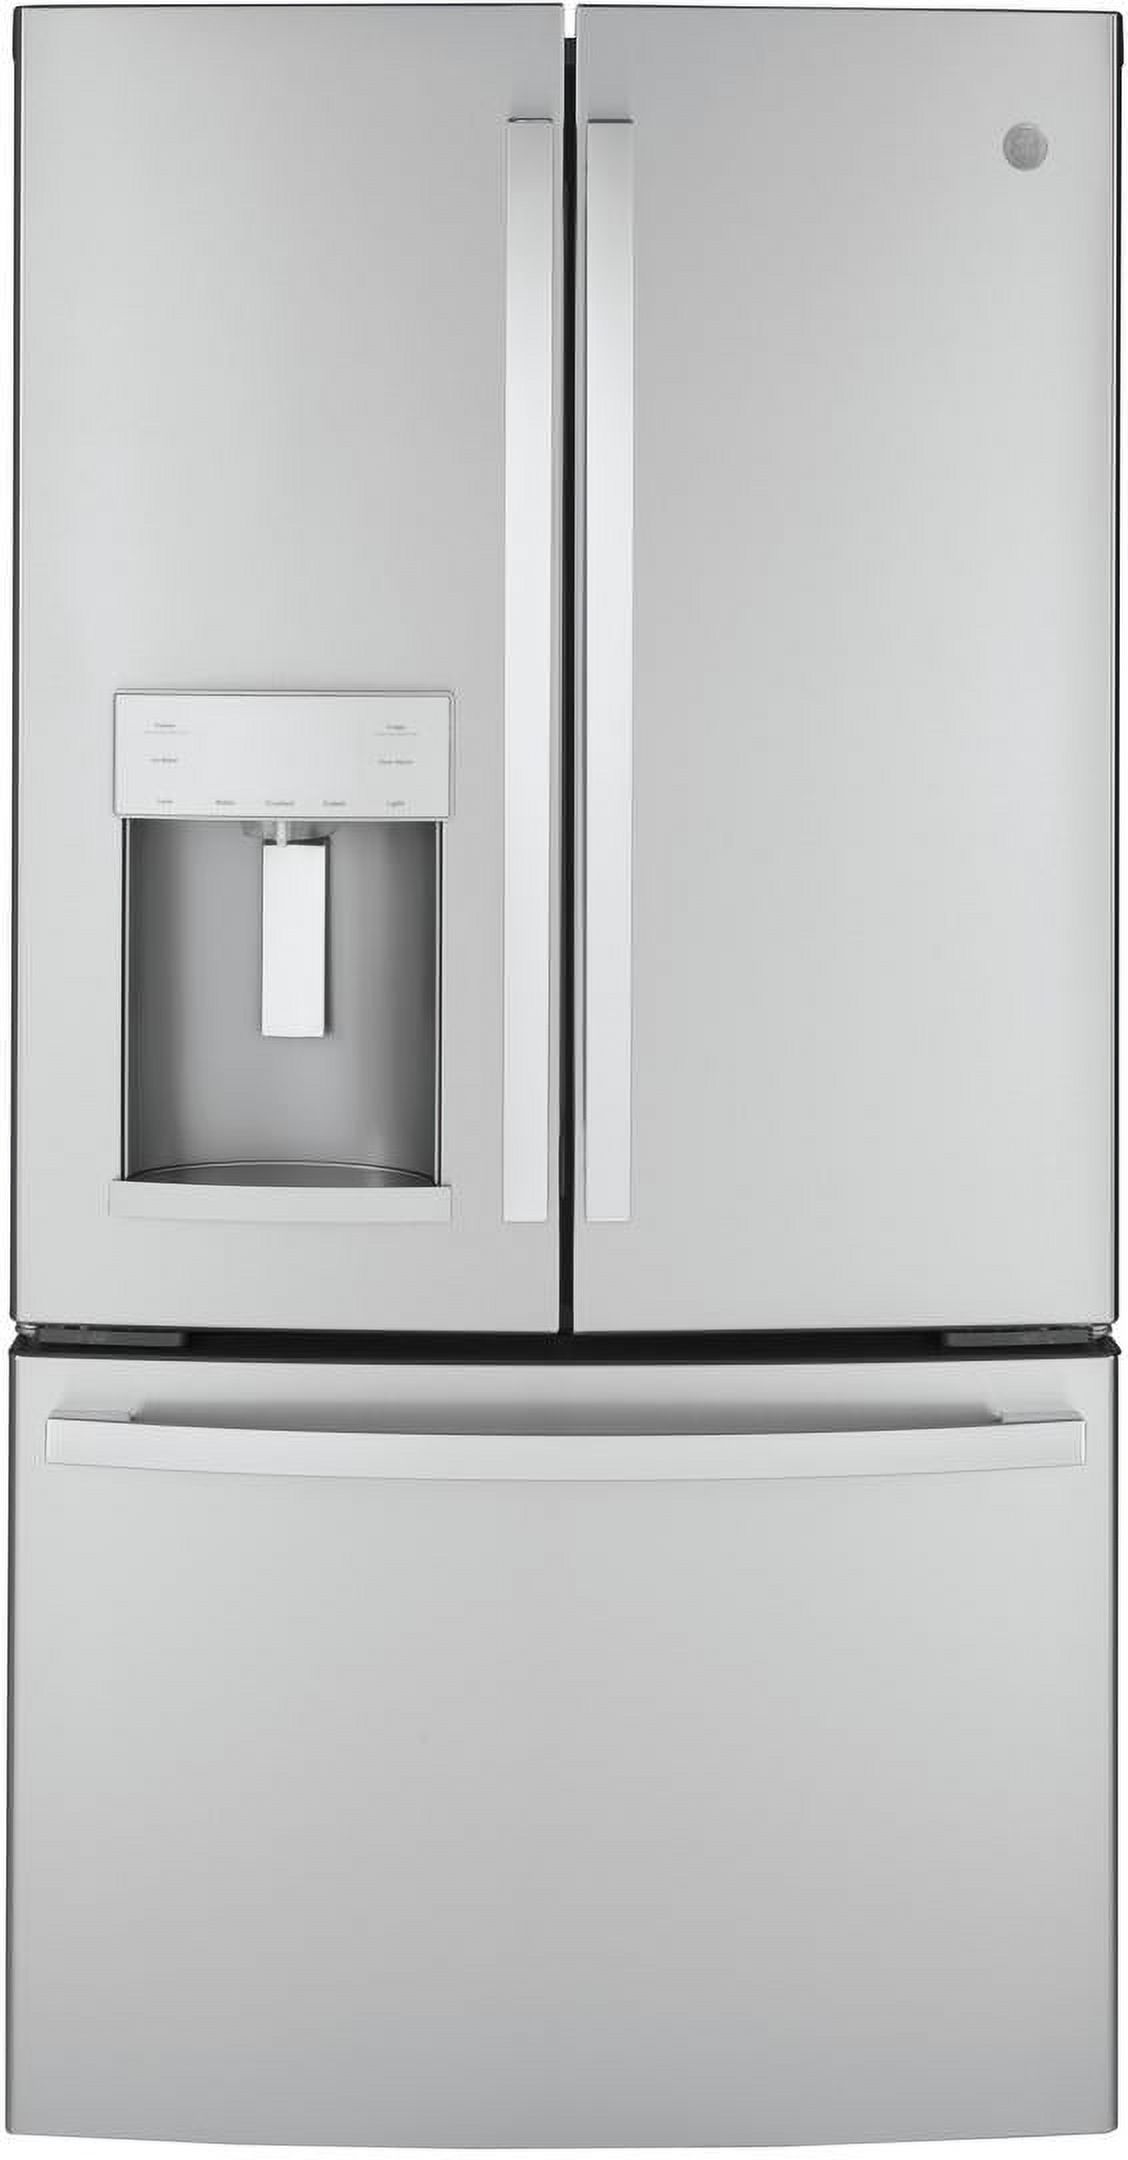 GE® ENERGY STAR® 22.1 Cu. Ft. Counter-Depth Fingerprint Resistant French-Door Refrigerator - image 2 of 9